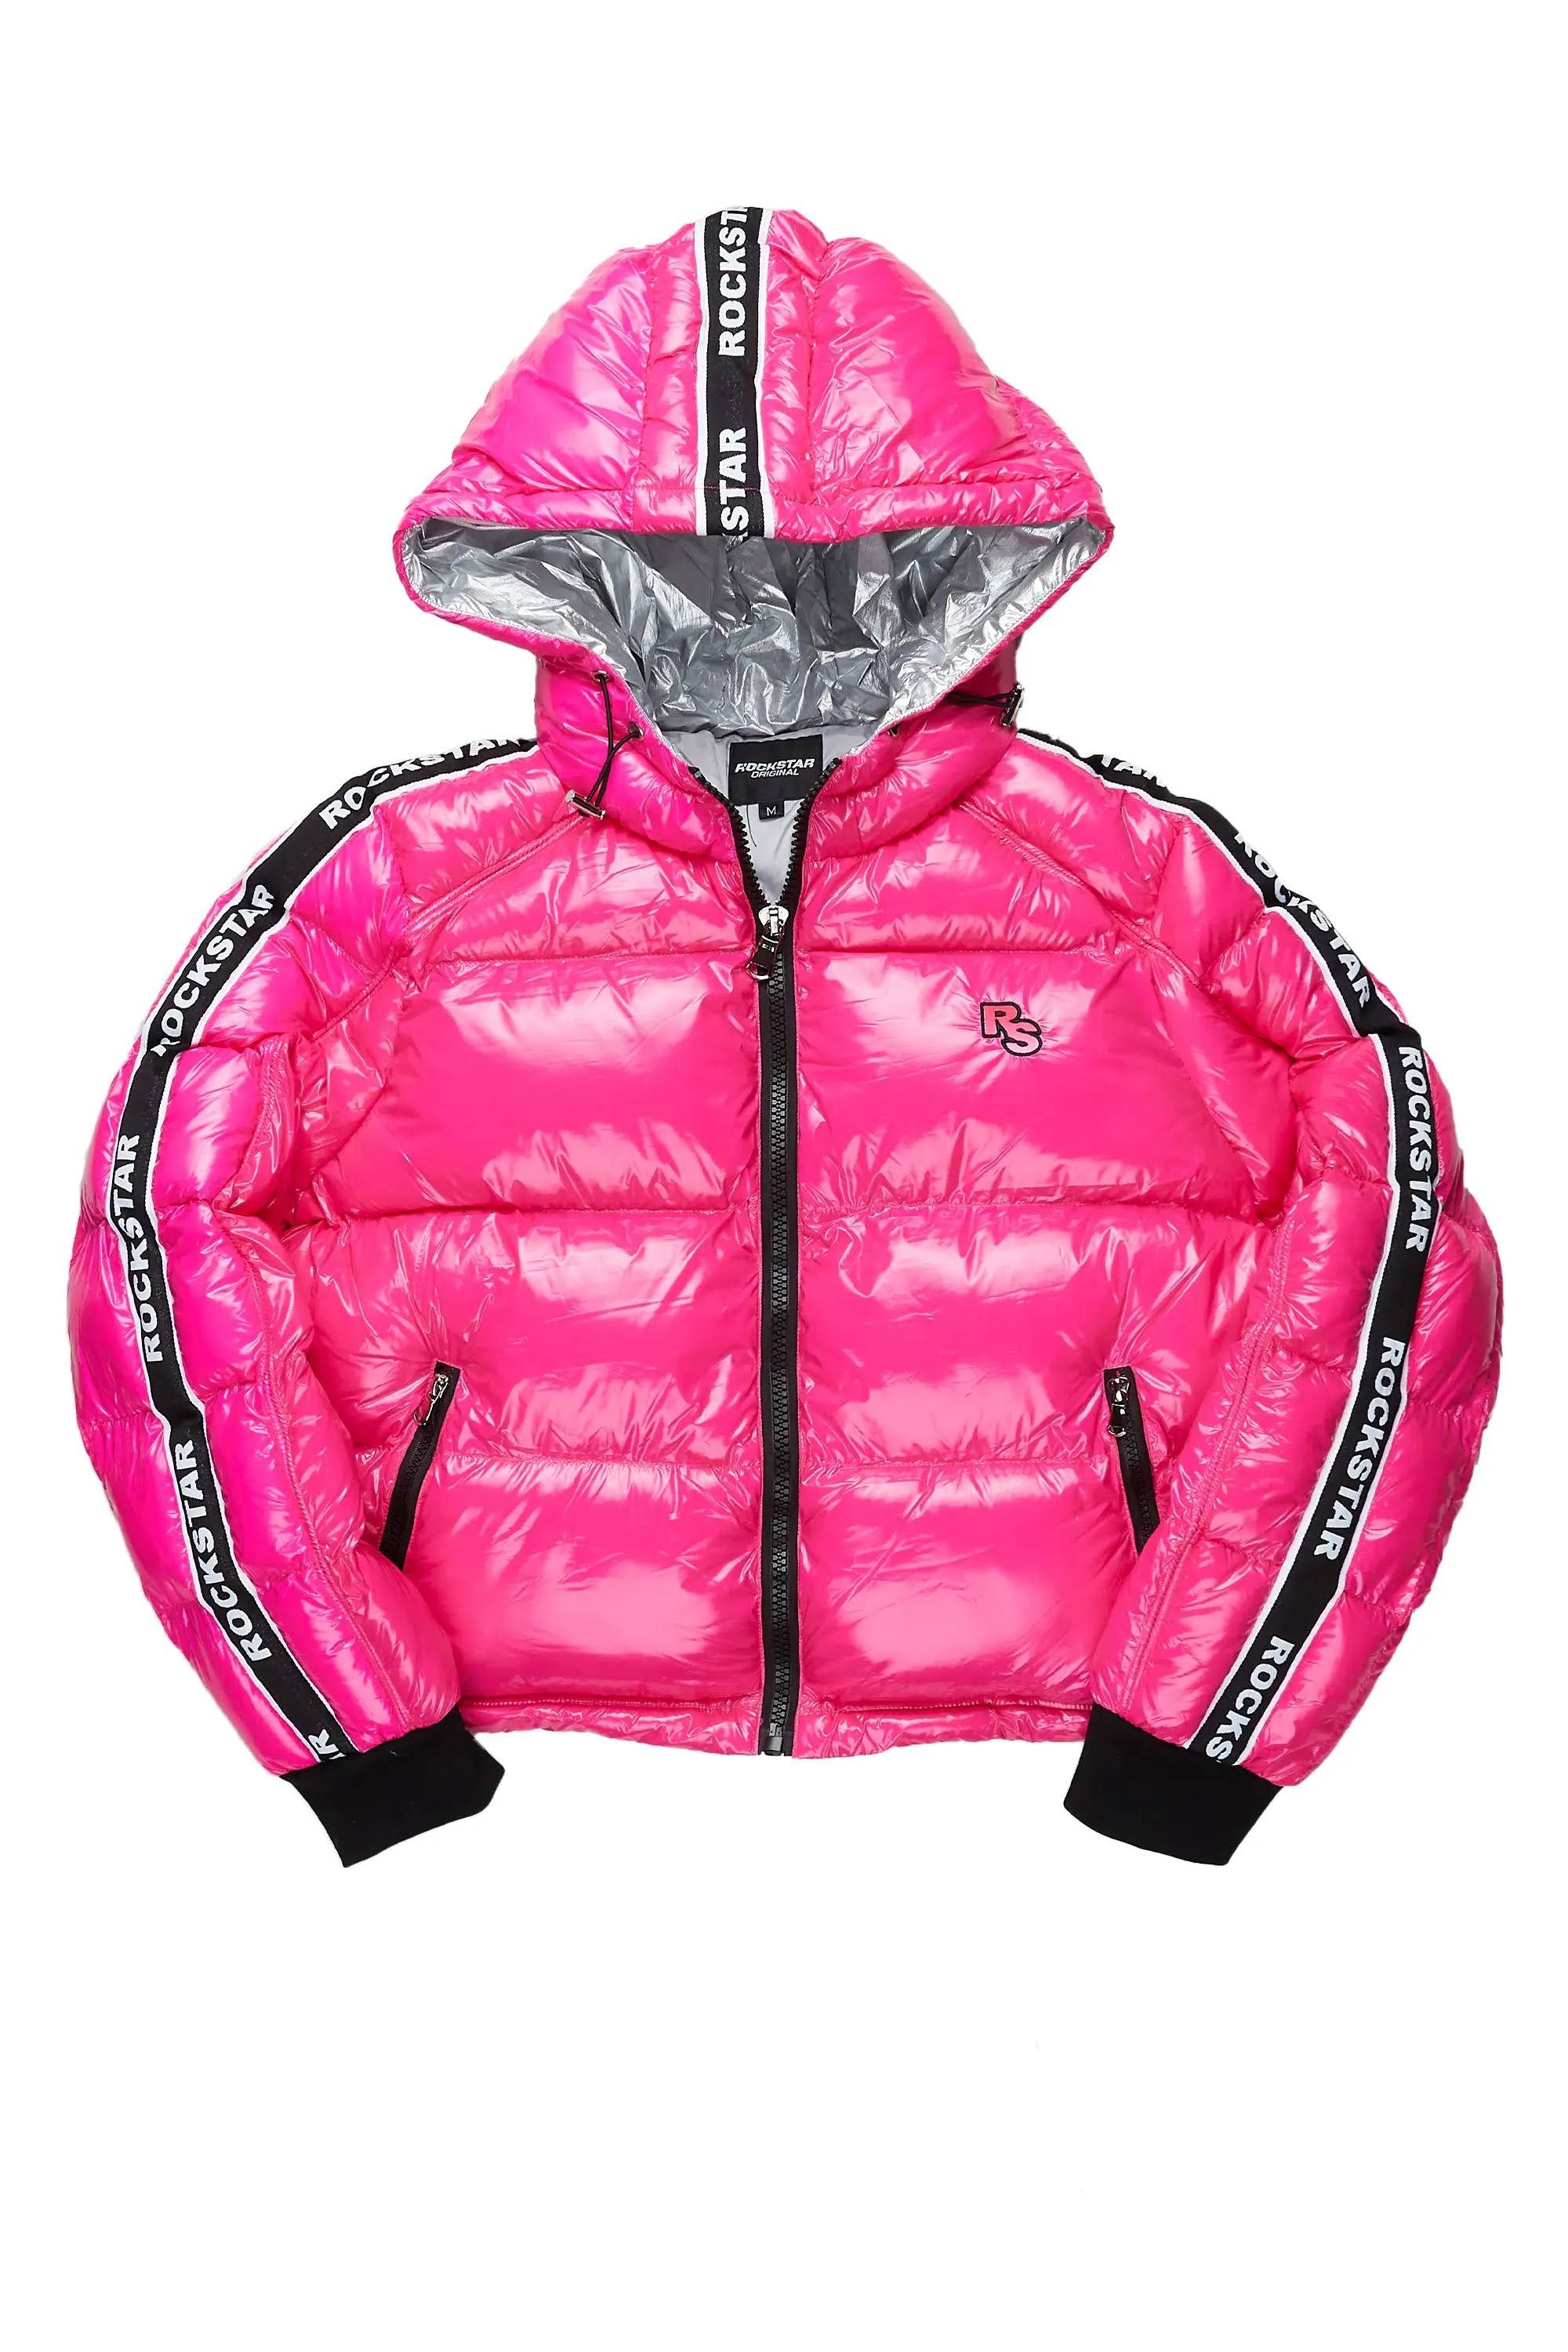 Stylish hot pink puffer jacket for women | Image